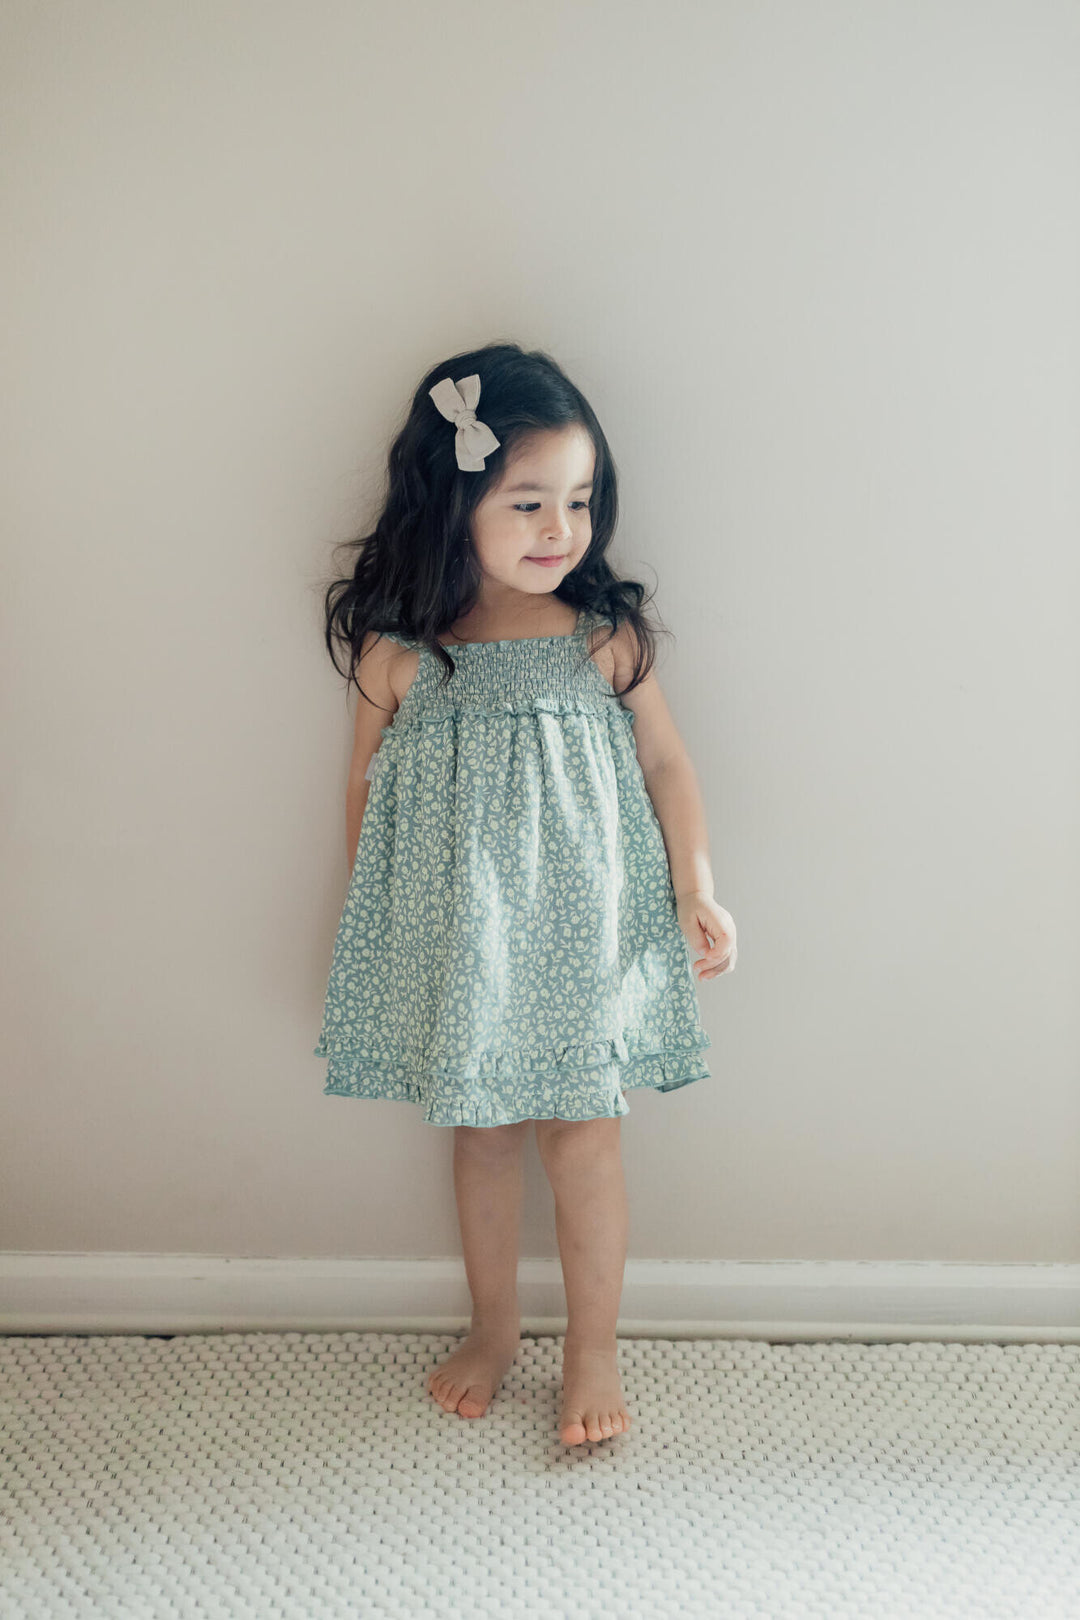 Child wearing Kids' Printed Muslin Summer Dress in Sprig Floral.